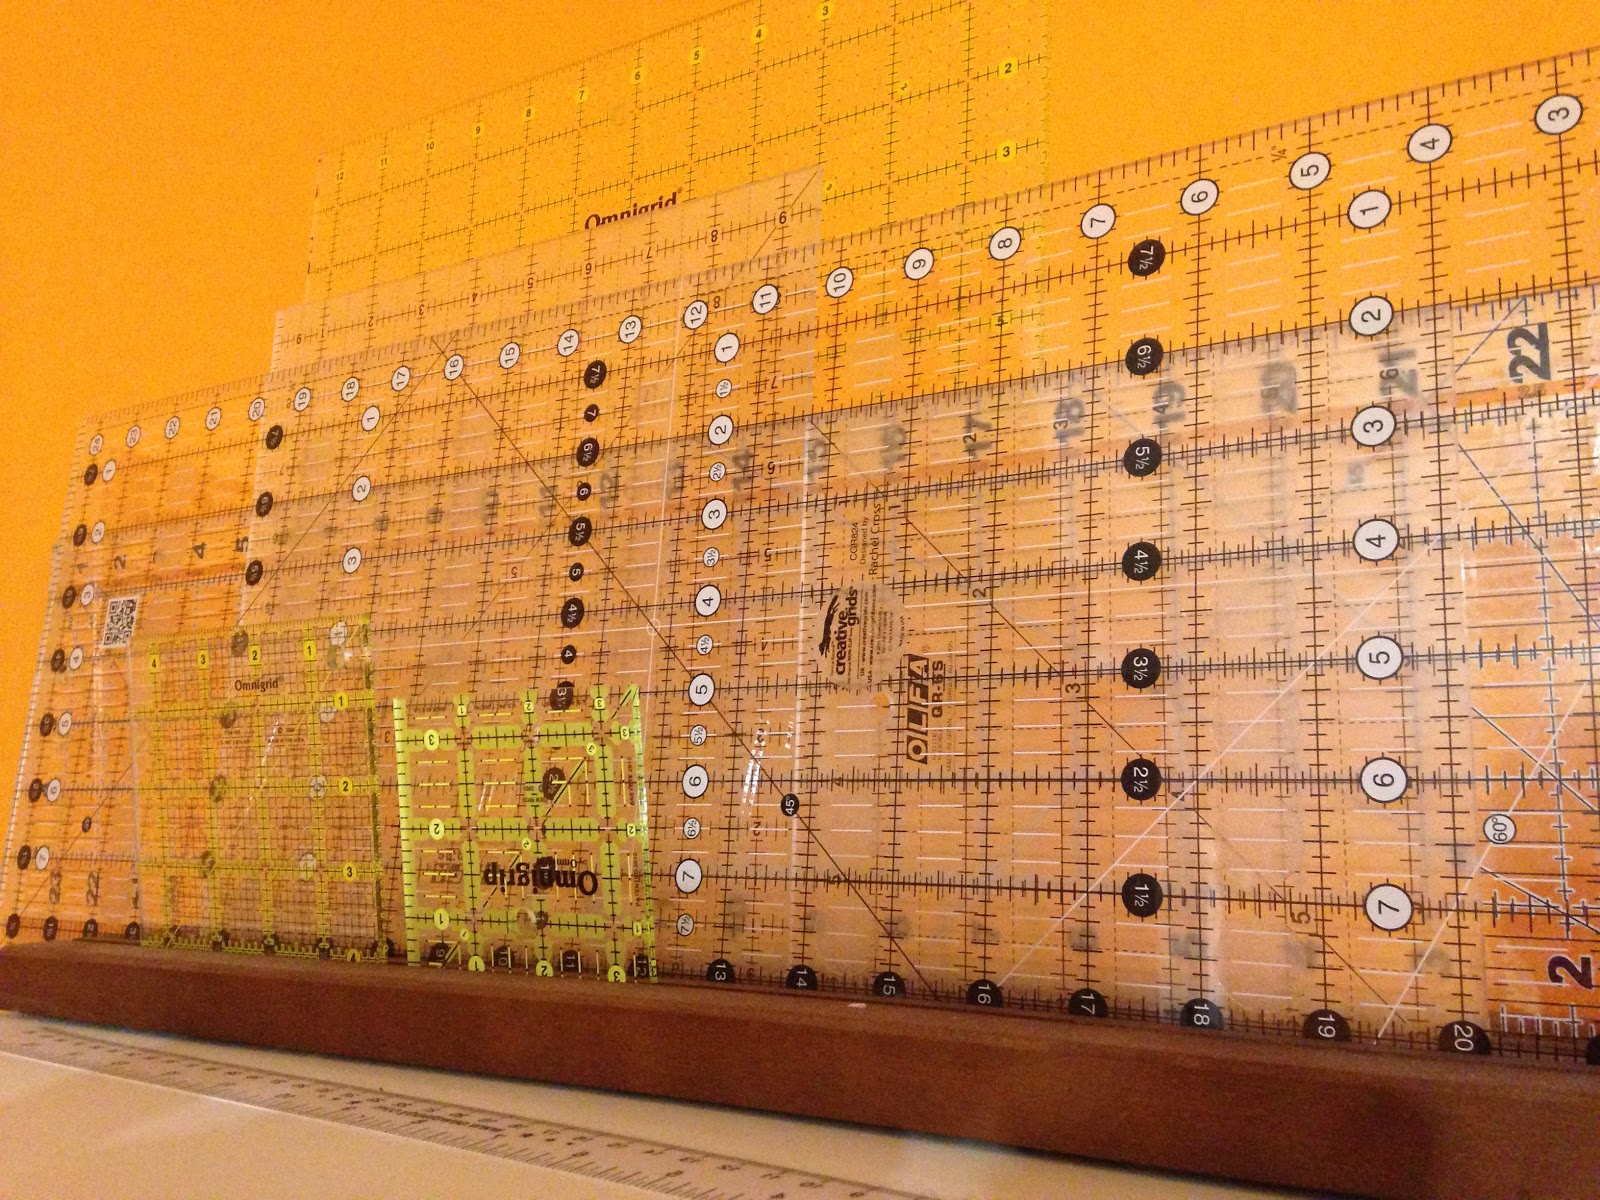 Creative Grid Ruler 16.5 Square